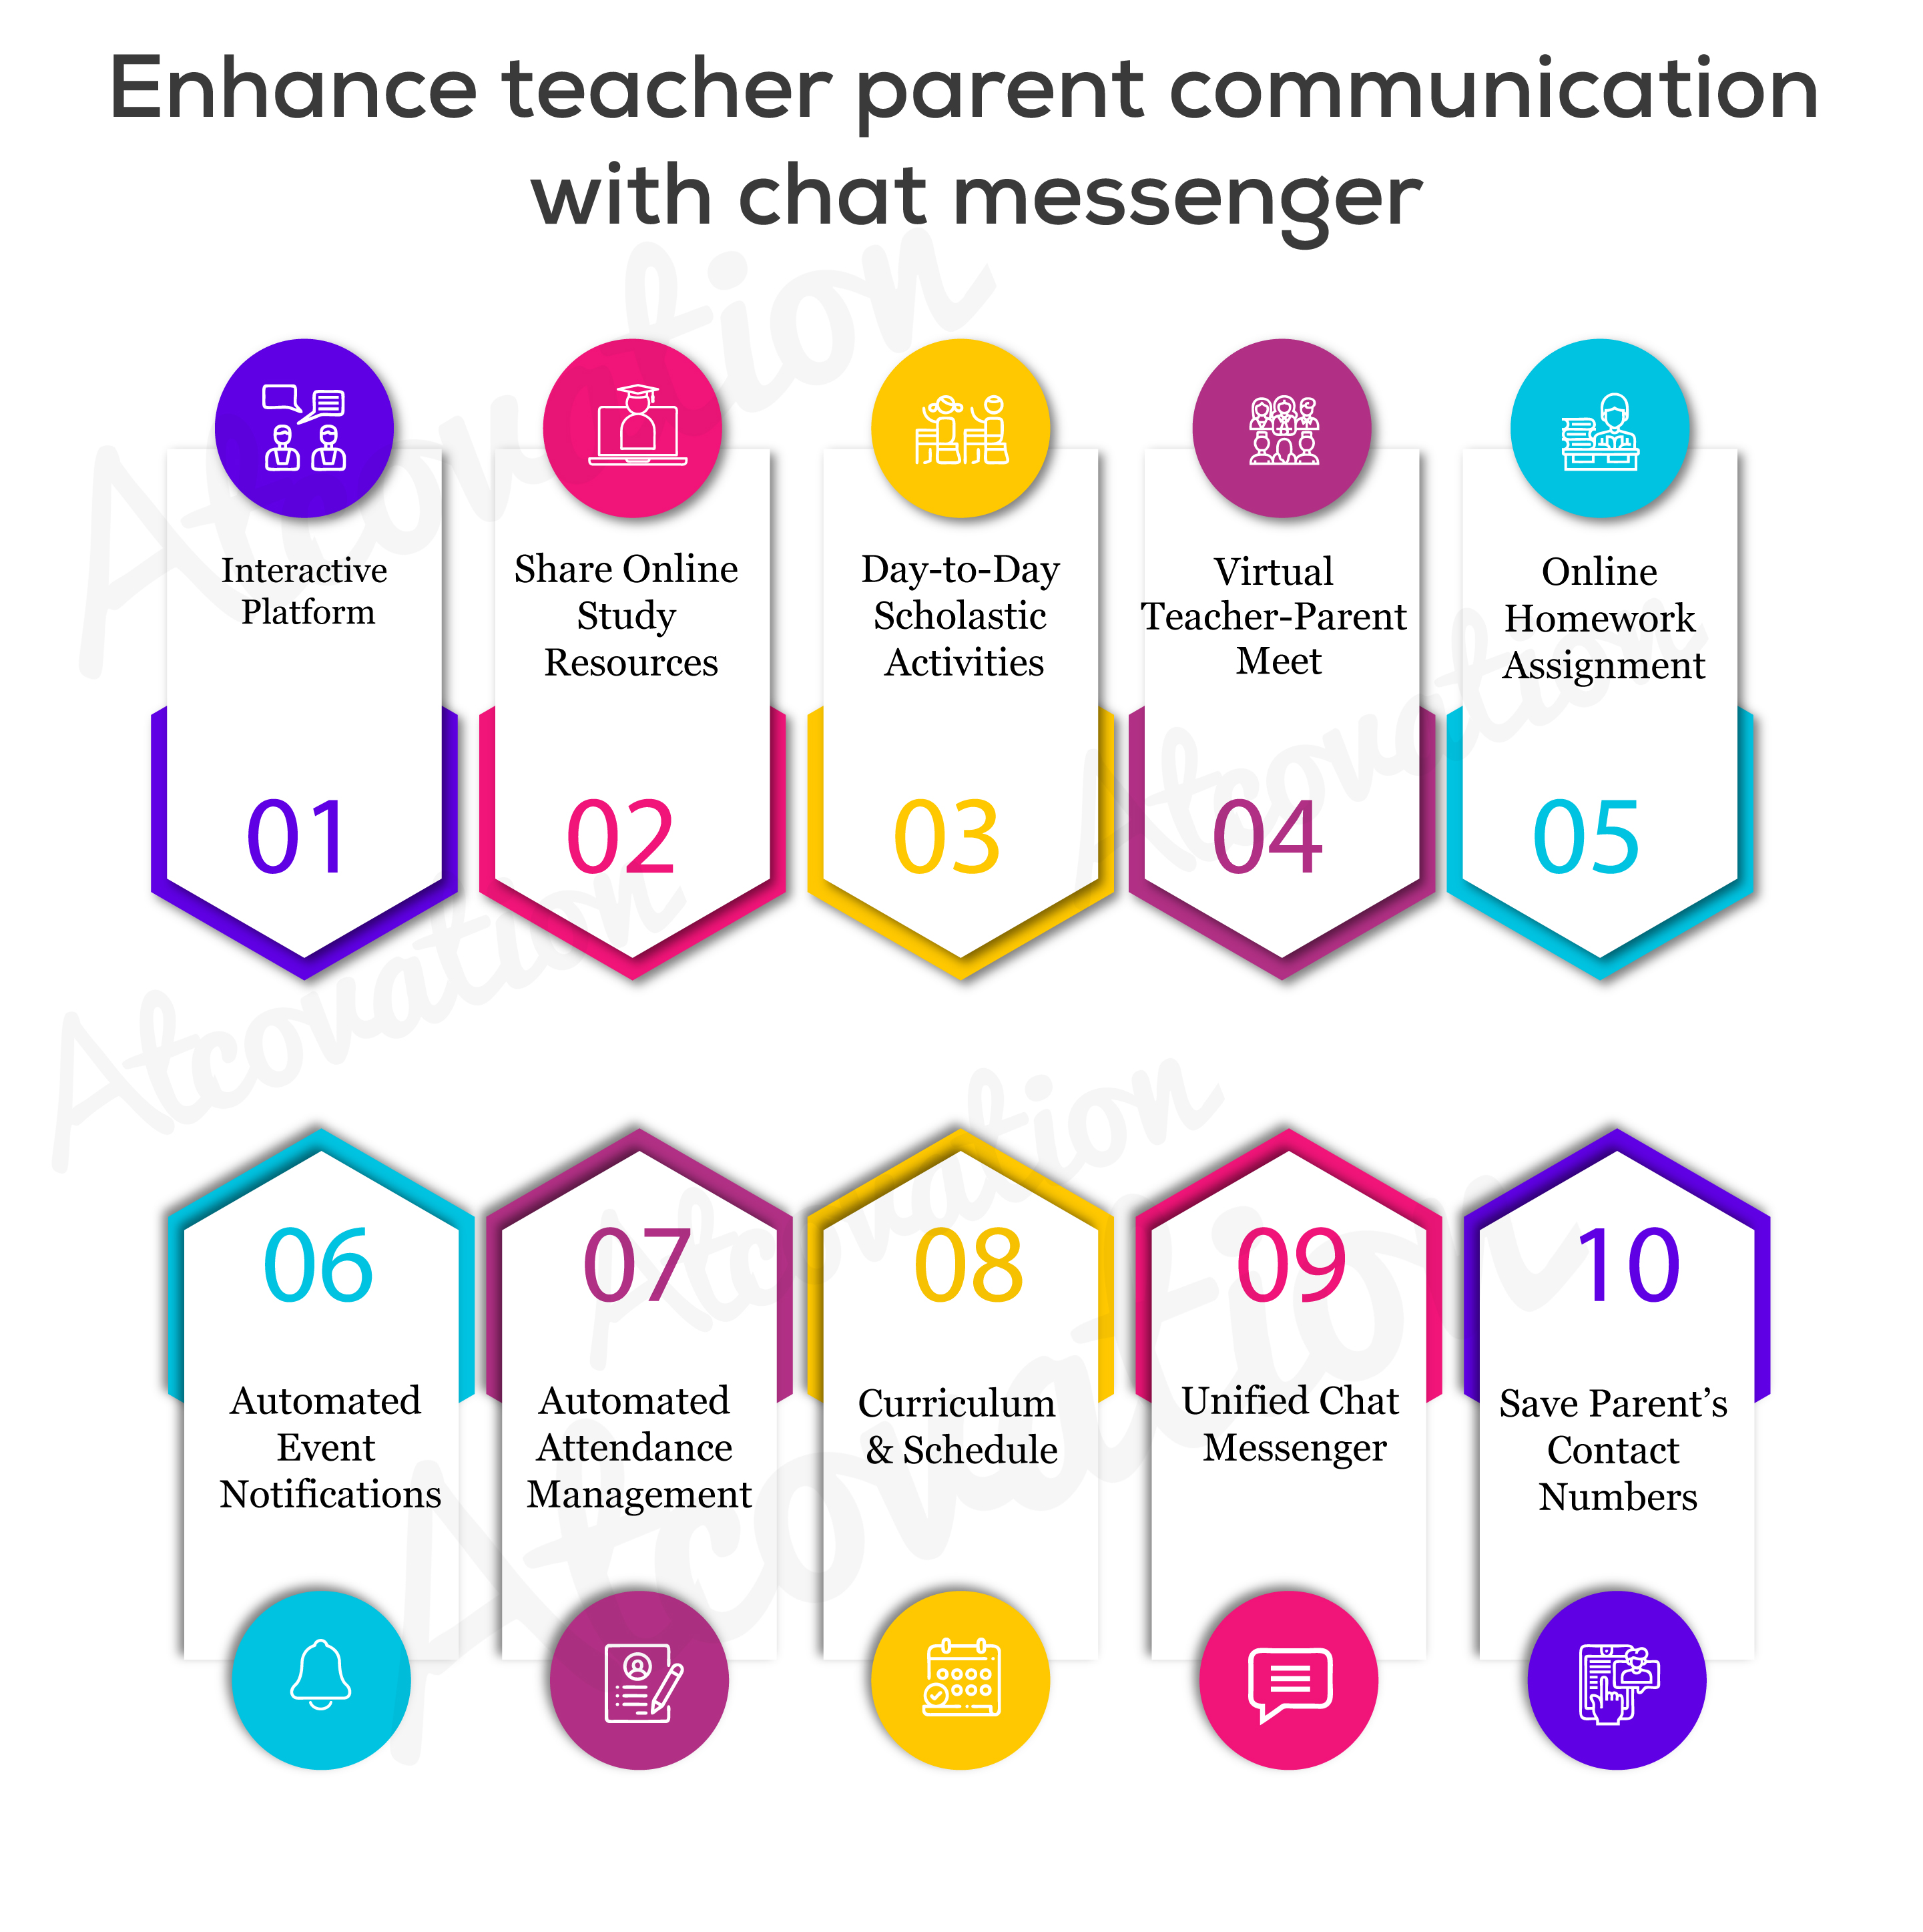 enhance-teacher-parent-communication-with-chat-messenger-infographic